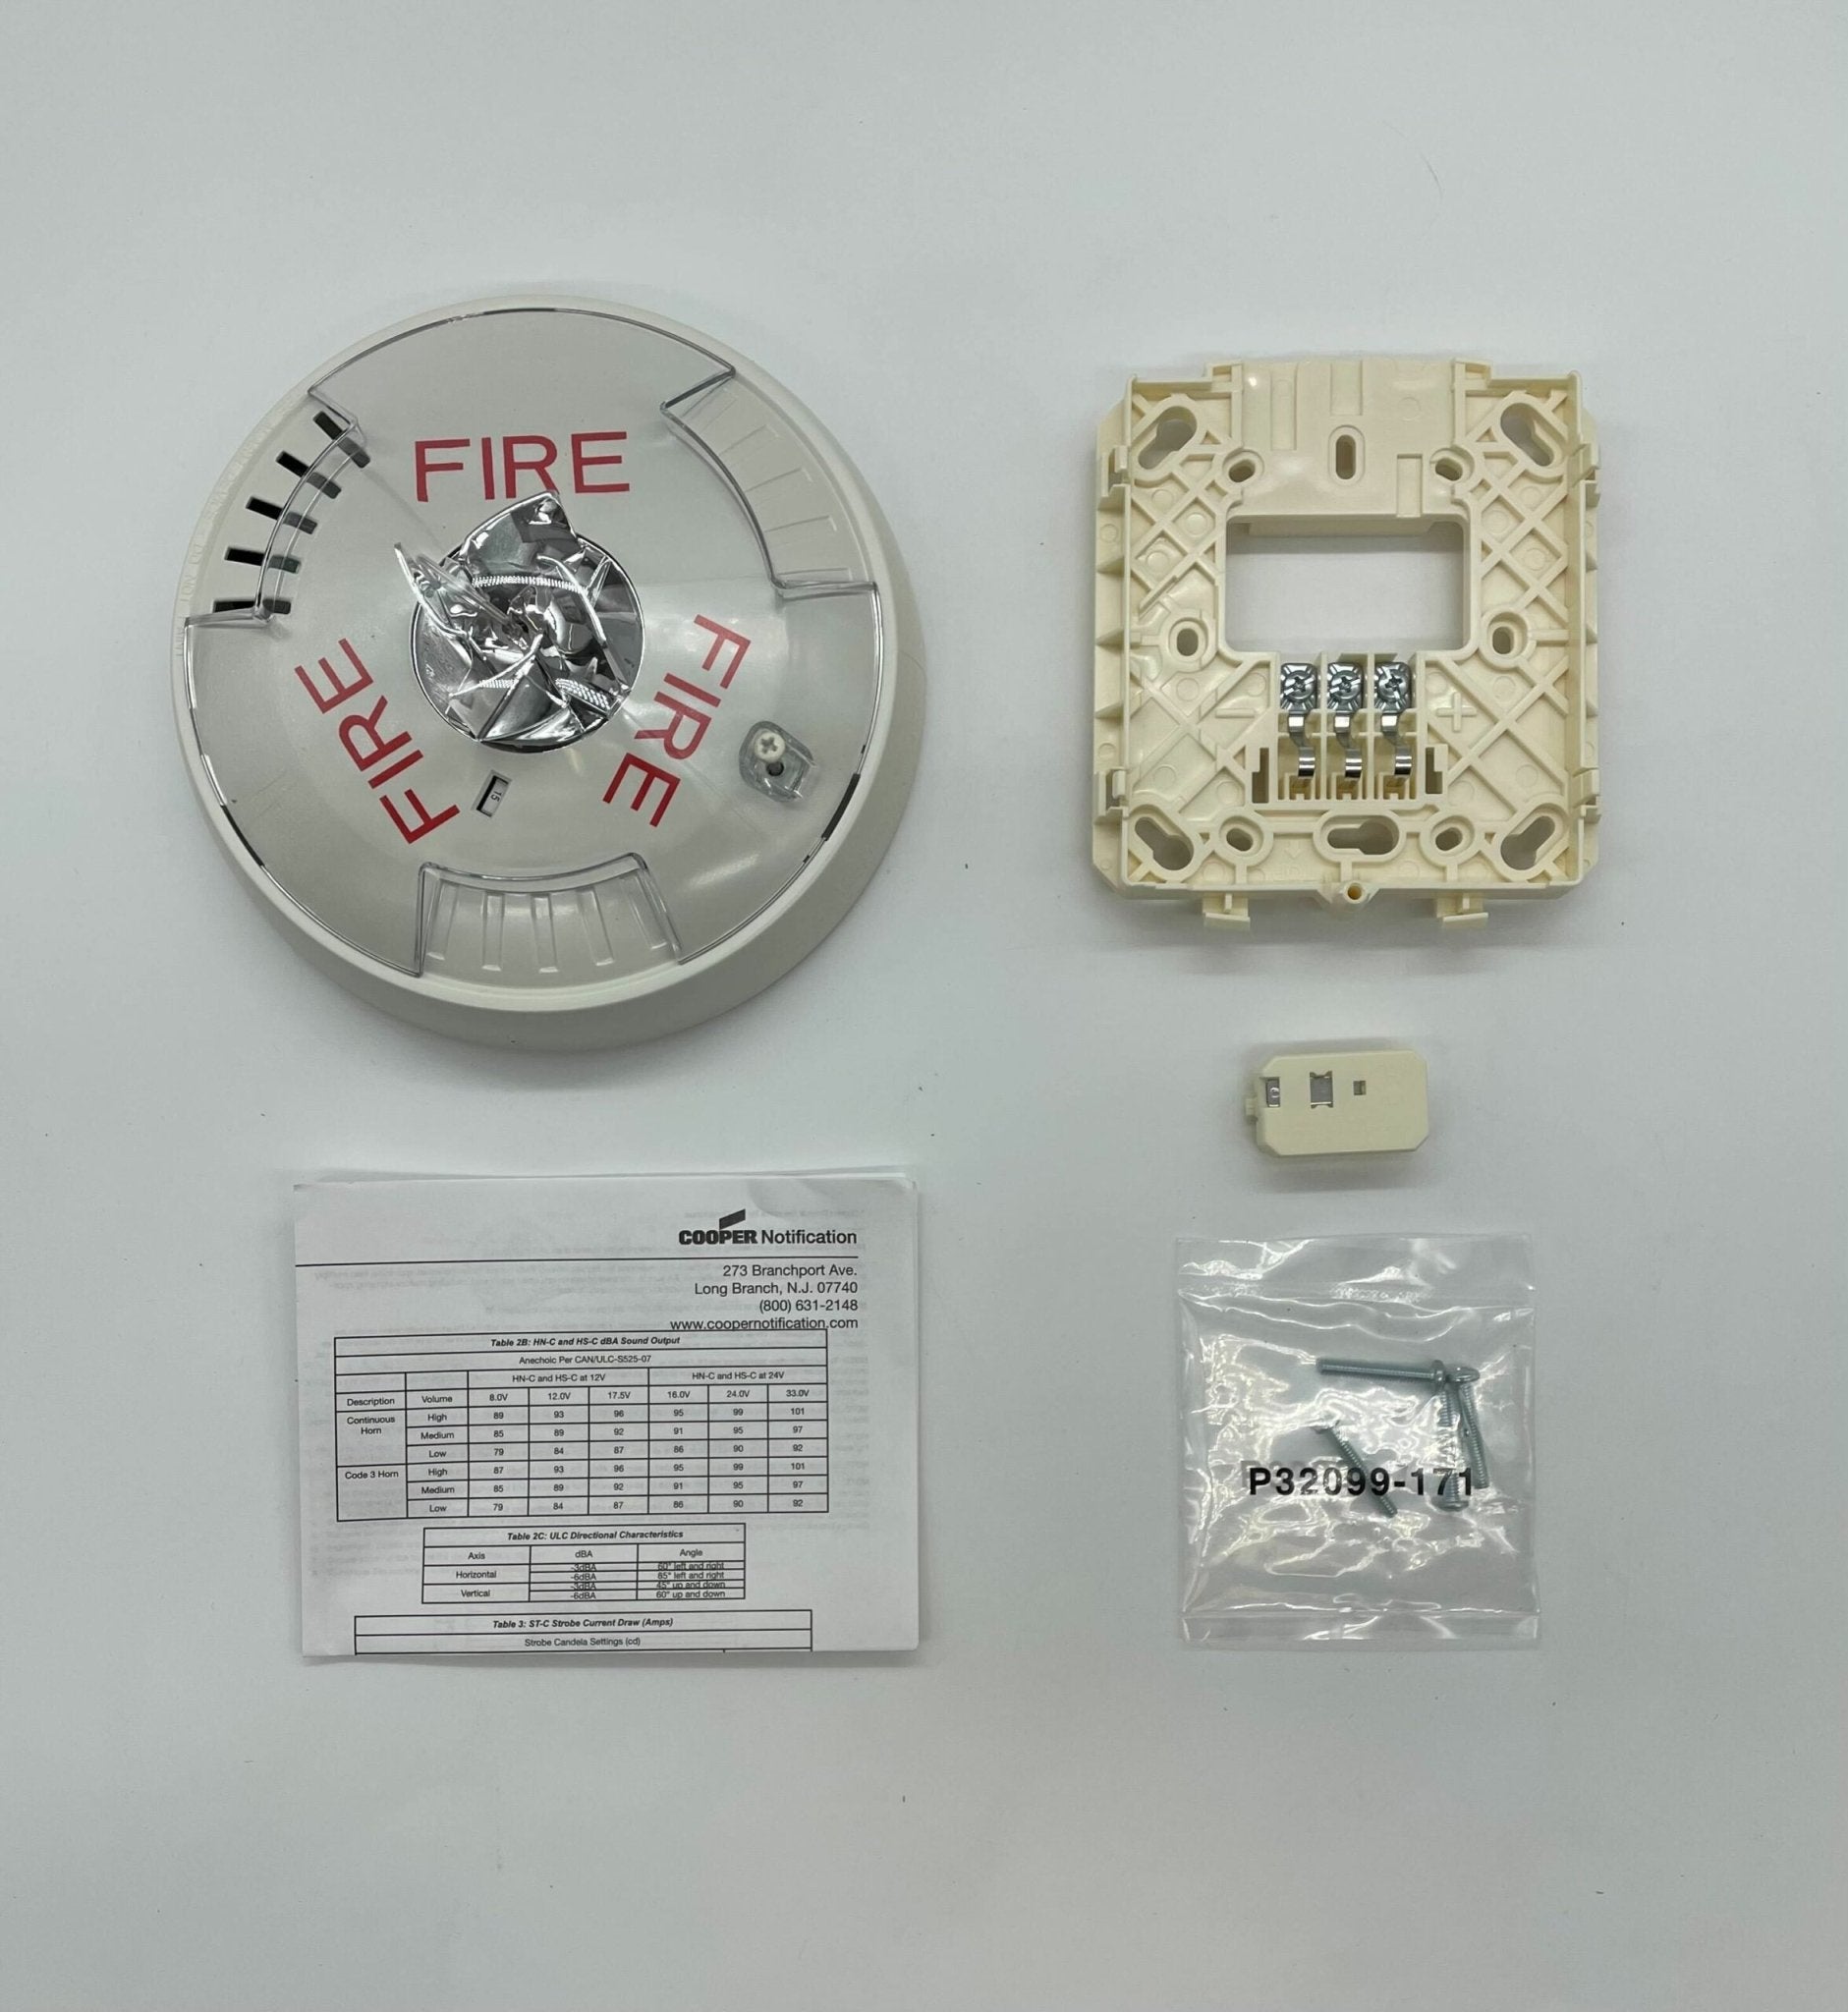 Wheelock HSWC - The Fire Alarm Supplier